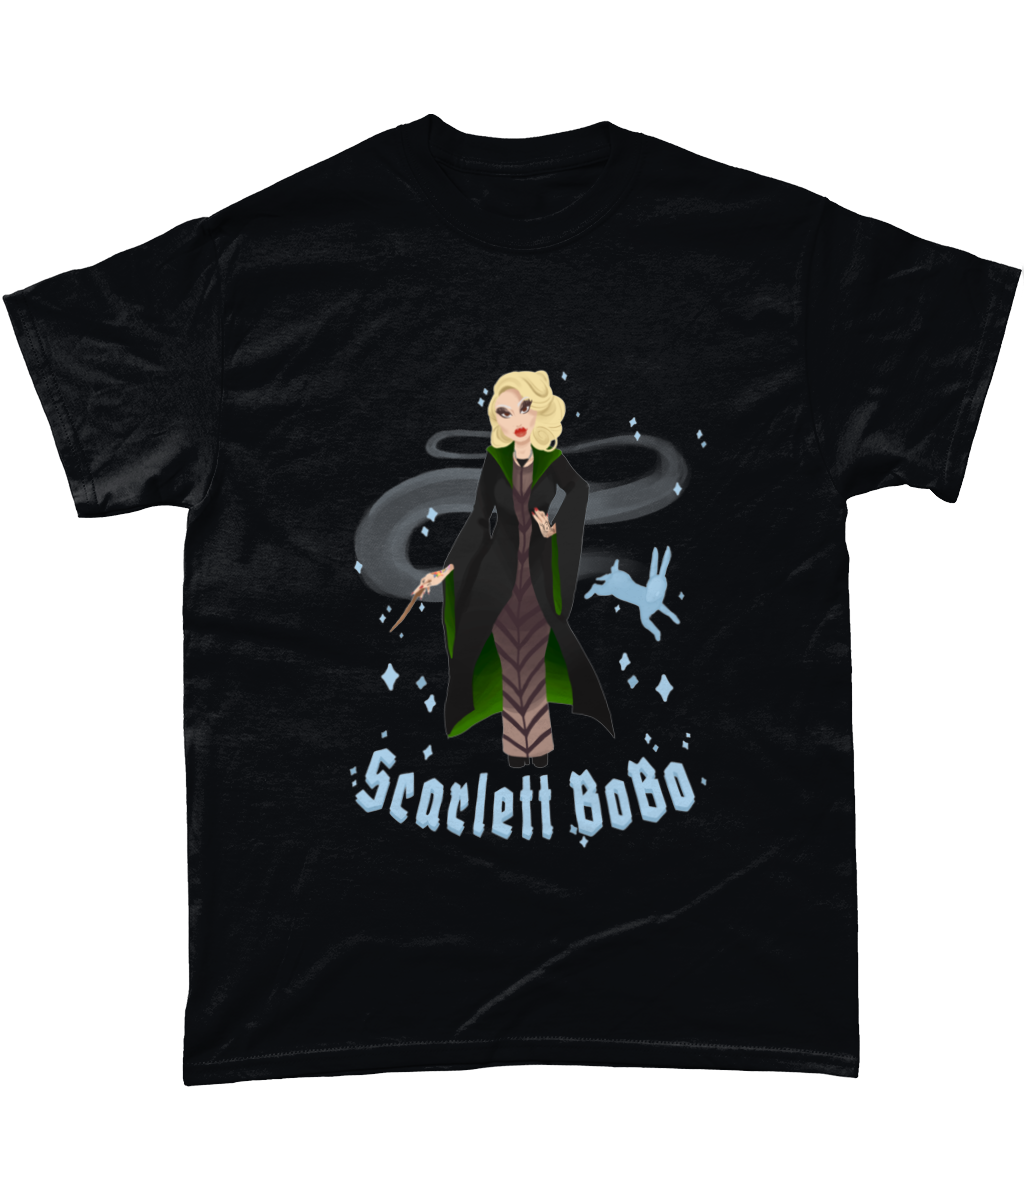 Scarlett Bobo - Slytherin Bobo T-Shirt - SNATCHED MERCH